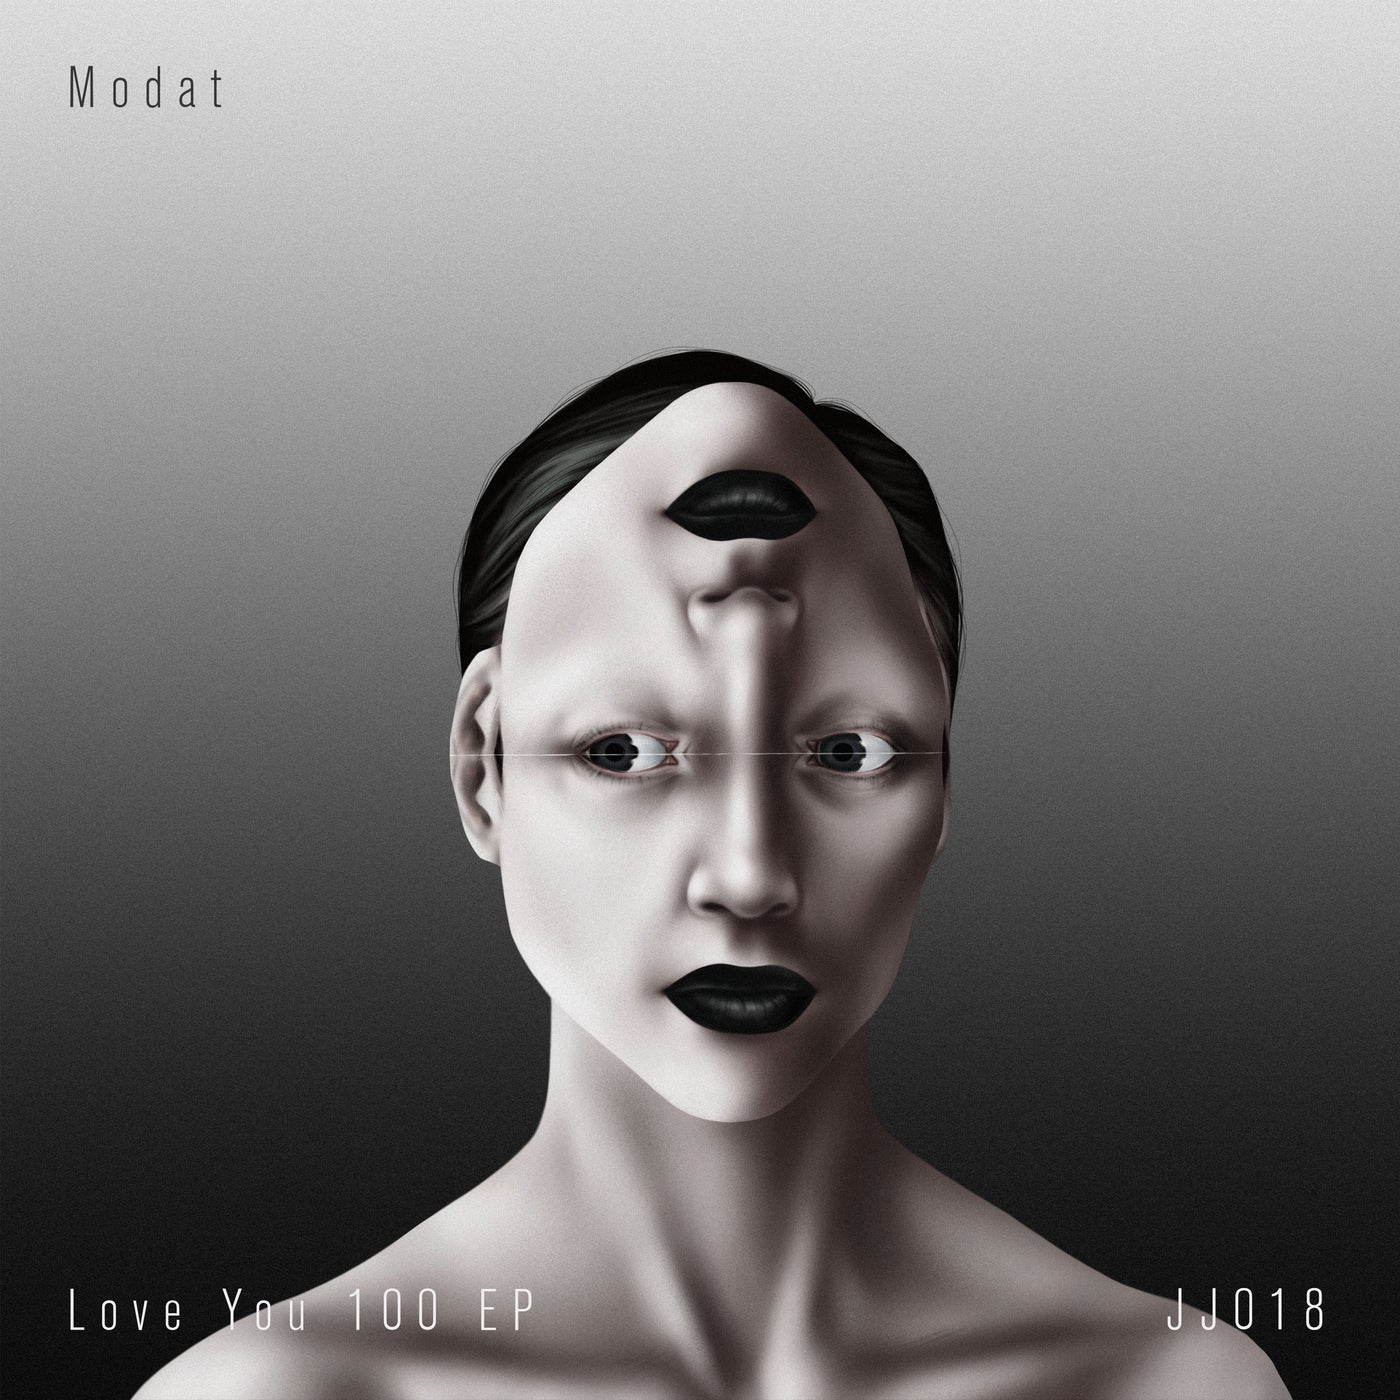 Modat – Love You 100 EP [JJ018]